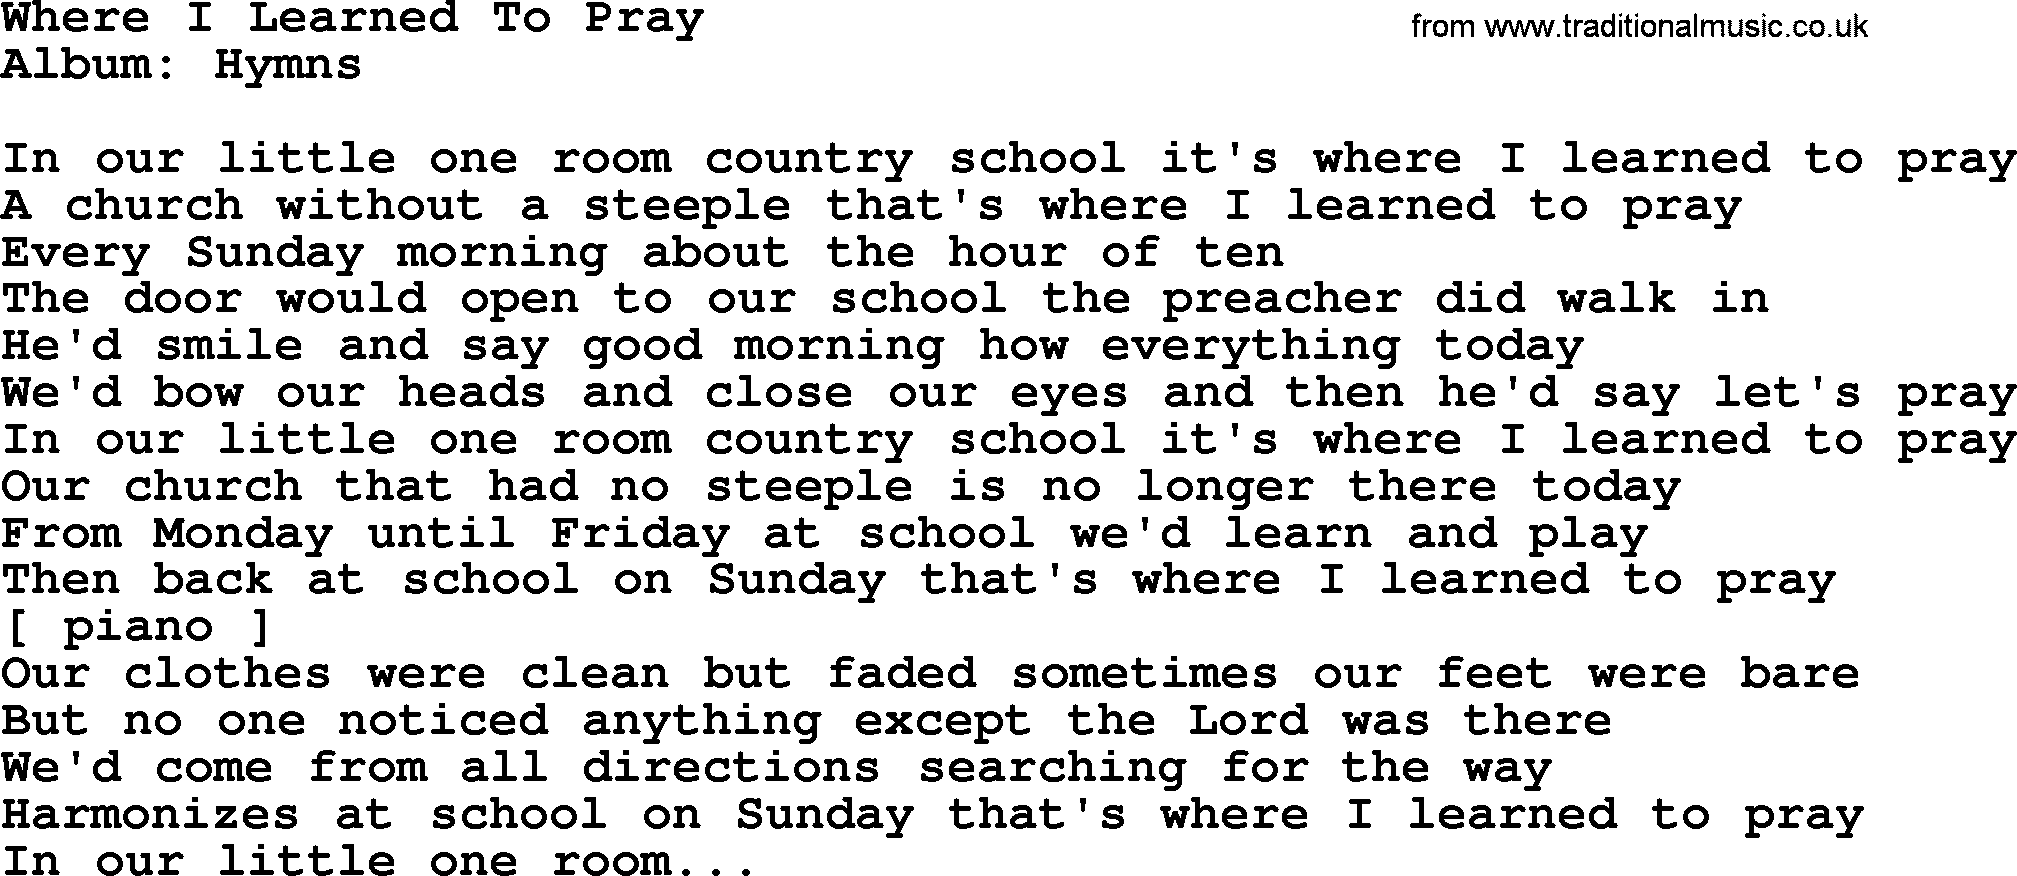 Loretta Lynn song: Where I Learned To Pray lyrics